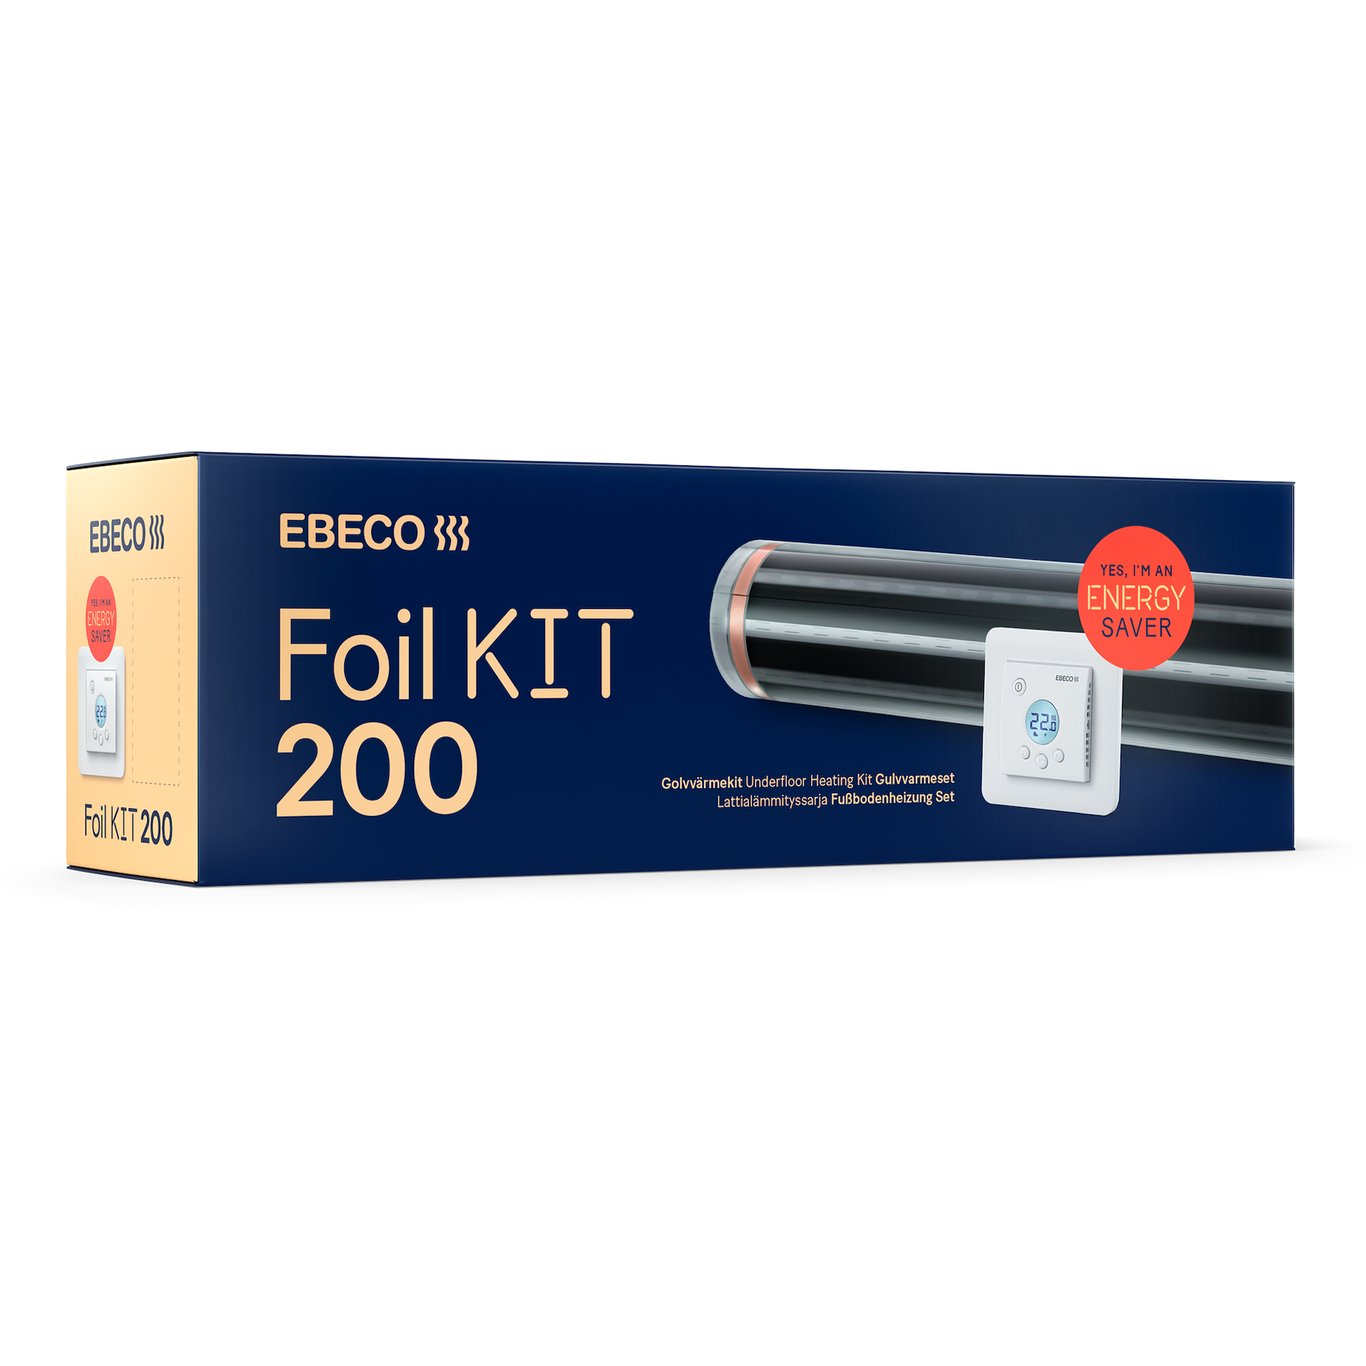 EBECO FOIL KIT 200 10-12 M² 65W/M²